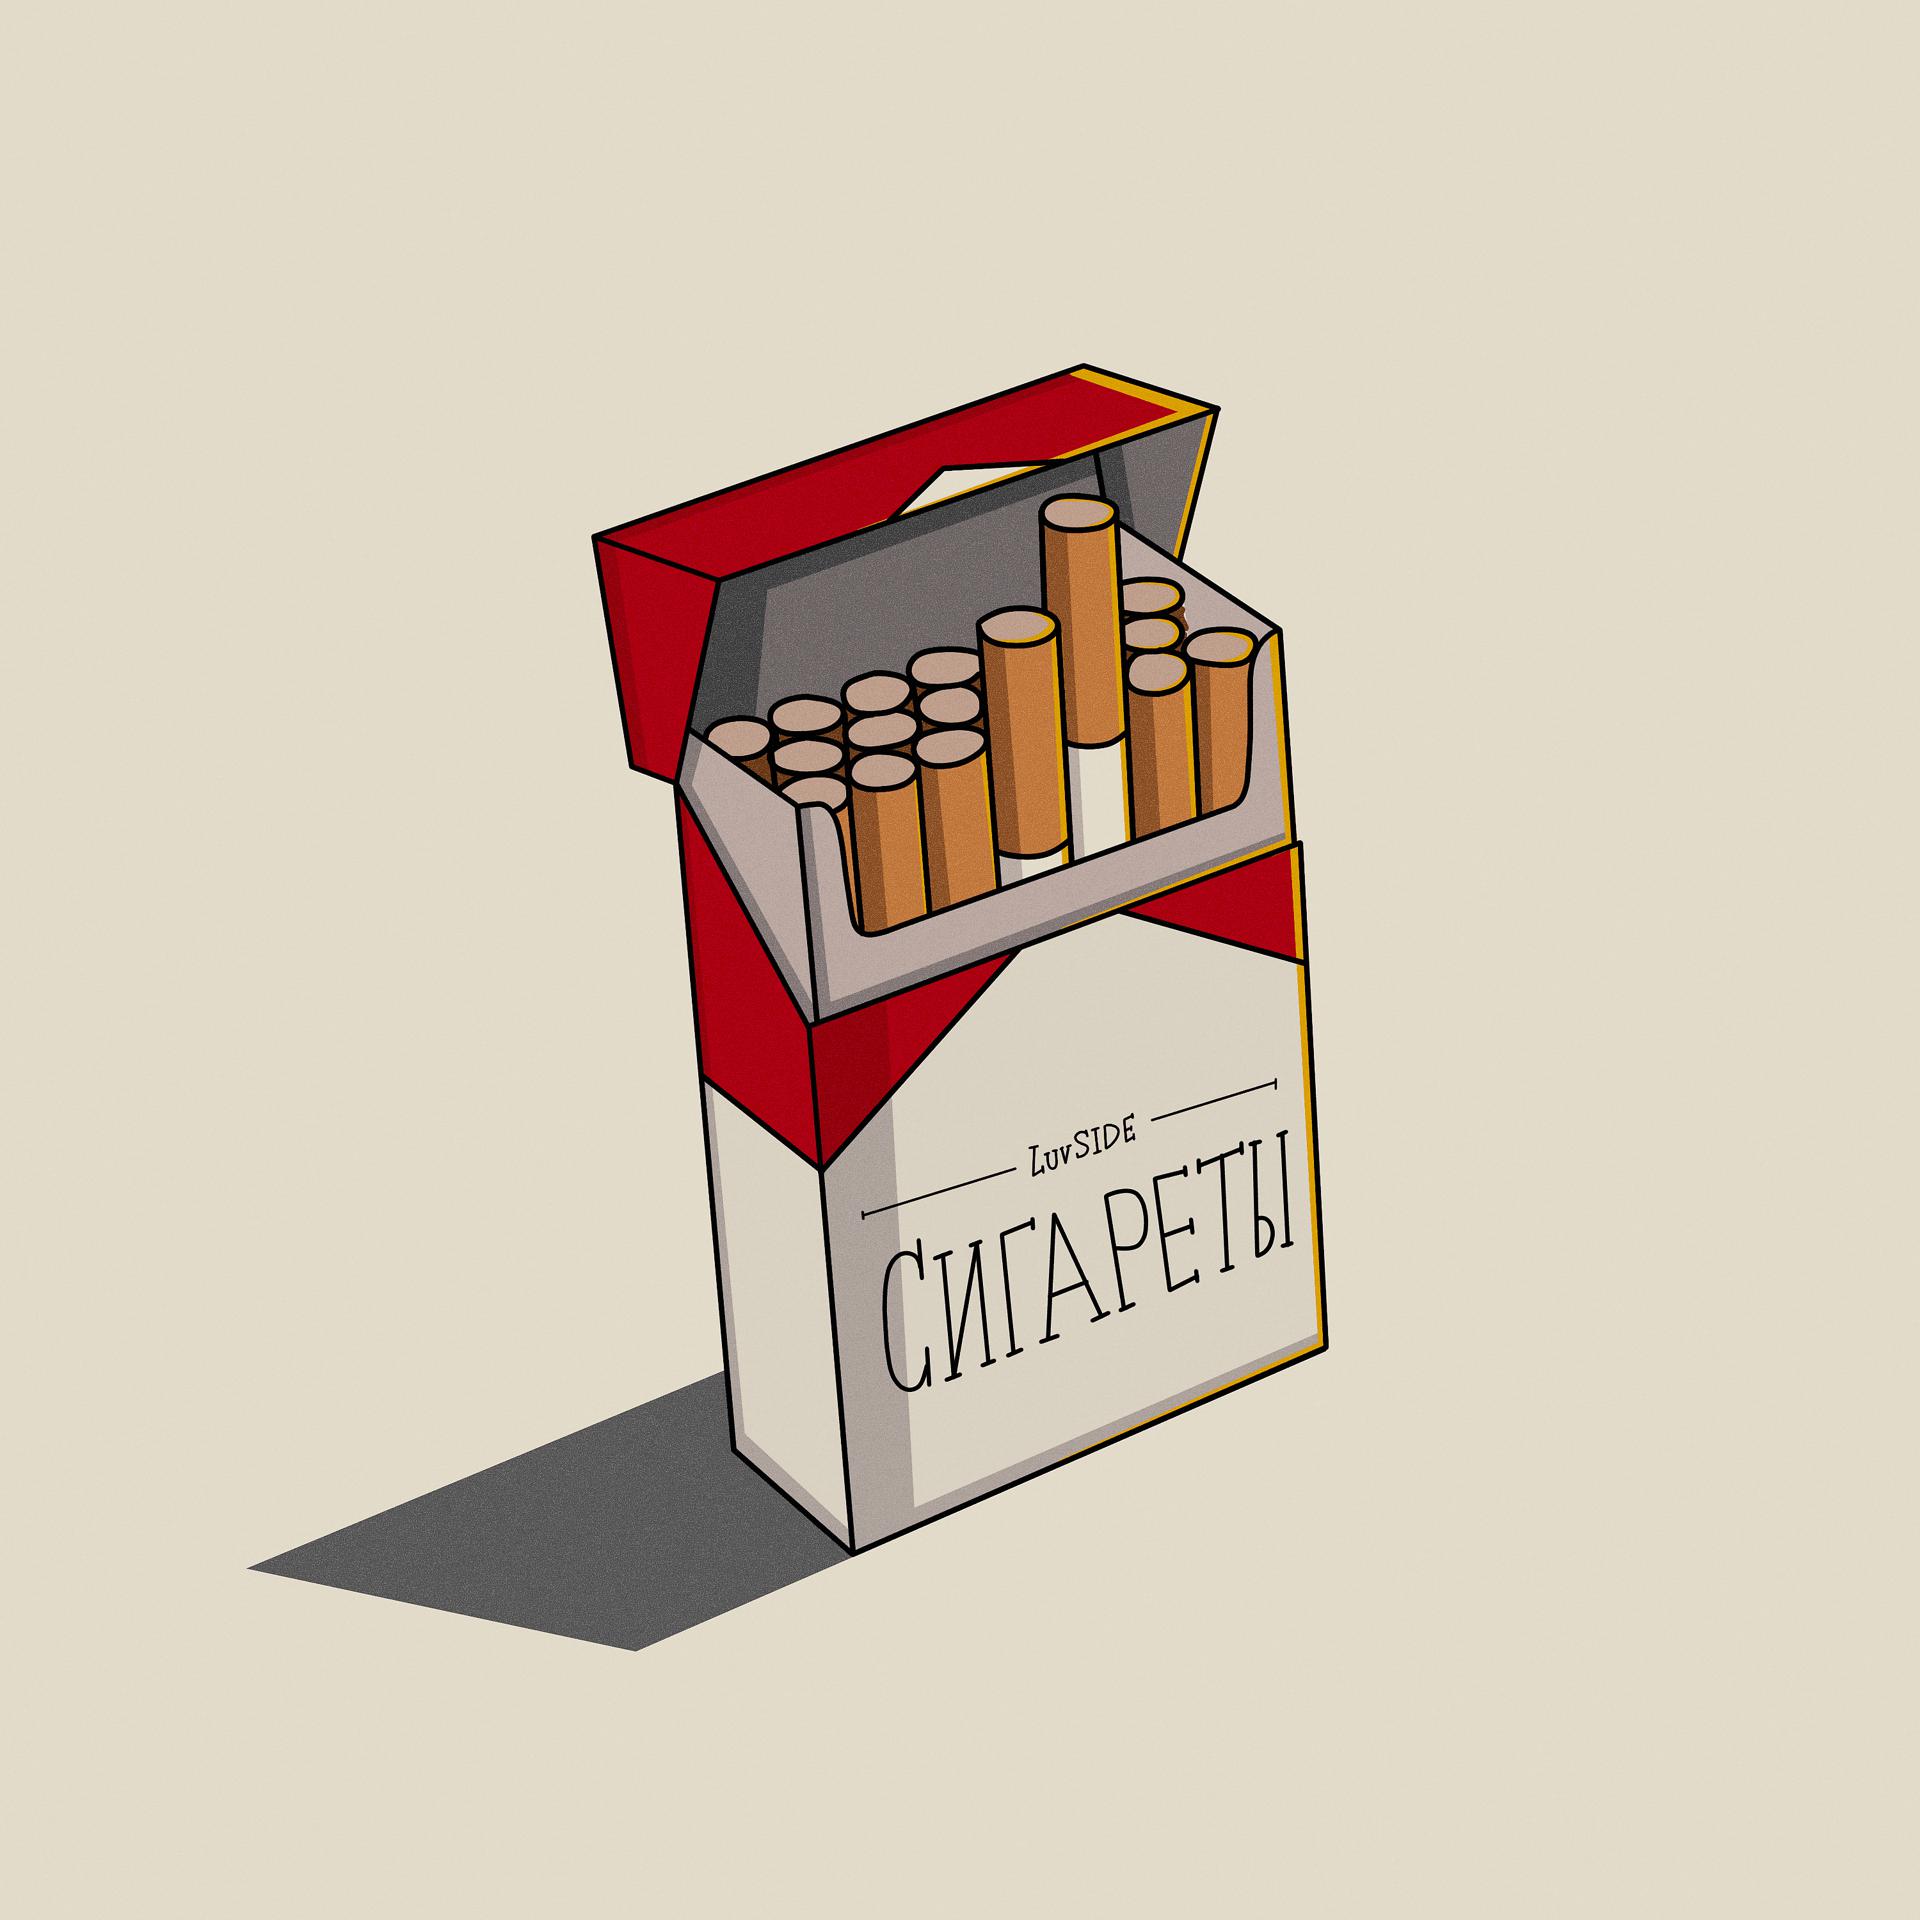 Постер альбома Сигареты